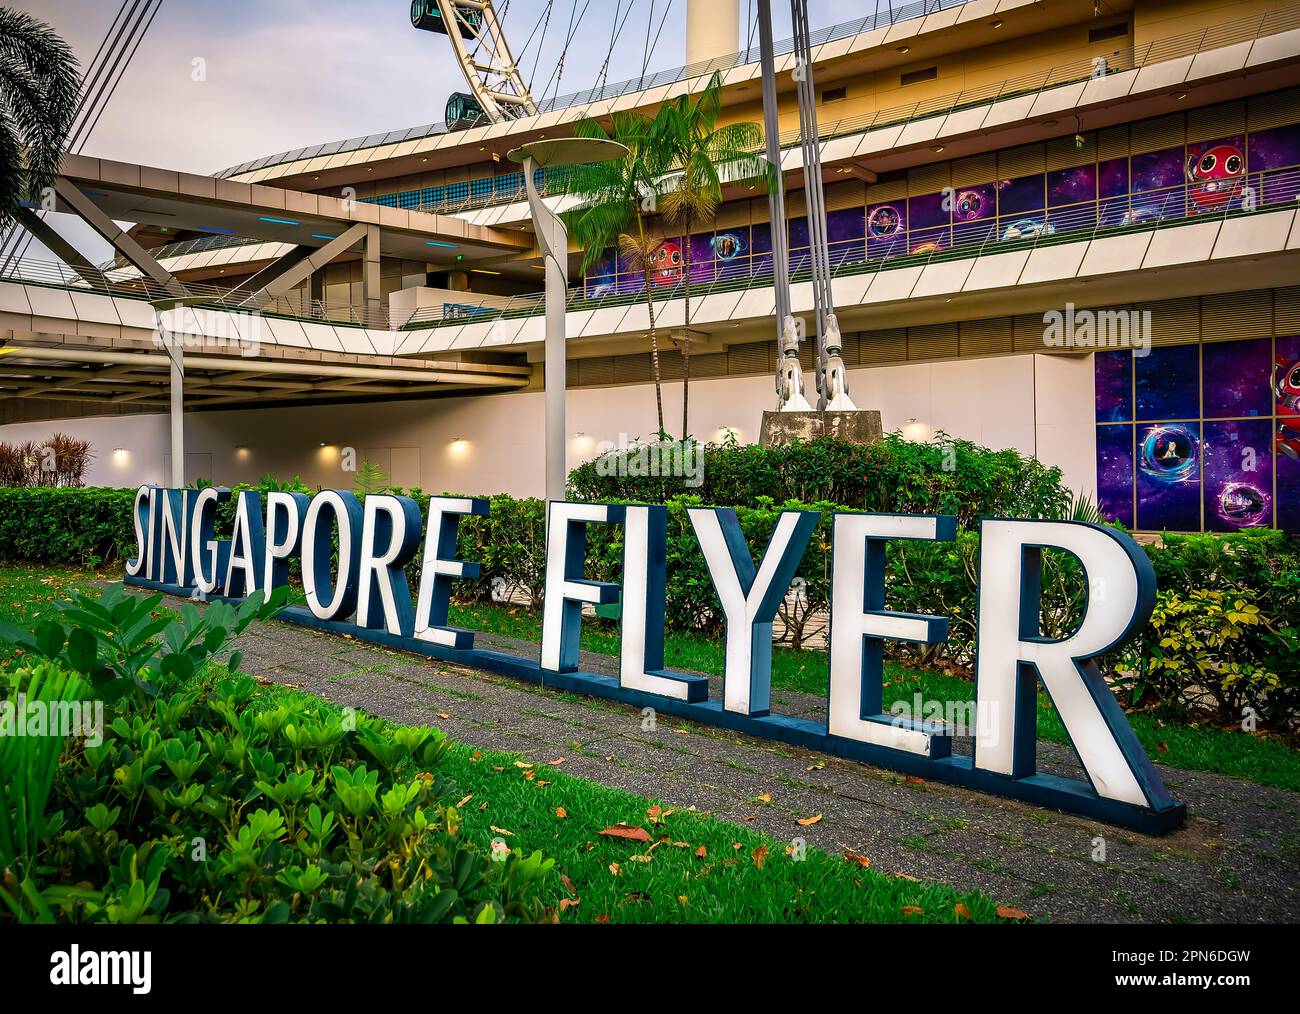 Singapore Flyer (ruota gigante di Farris) accanto al fiume Singapore. Foto Stock